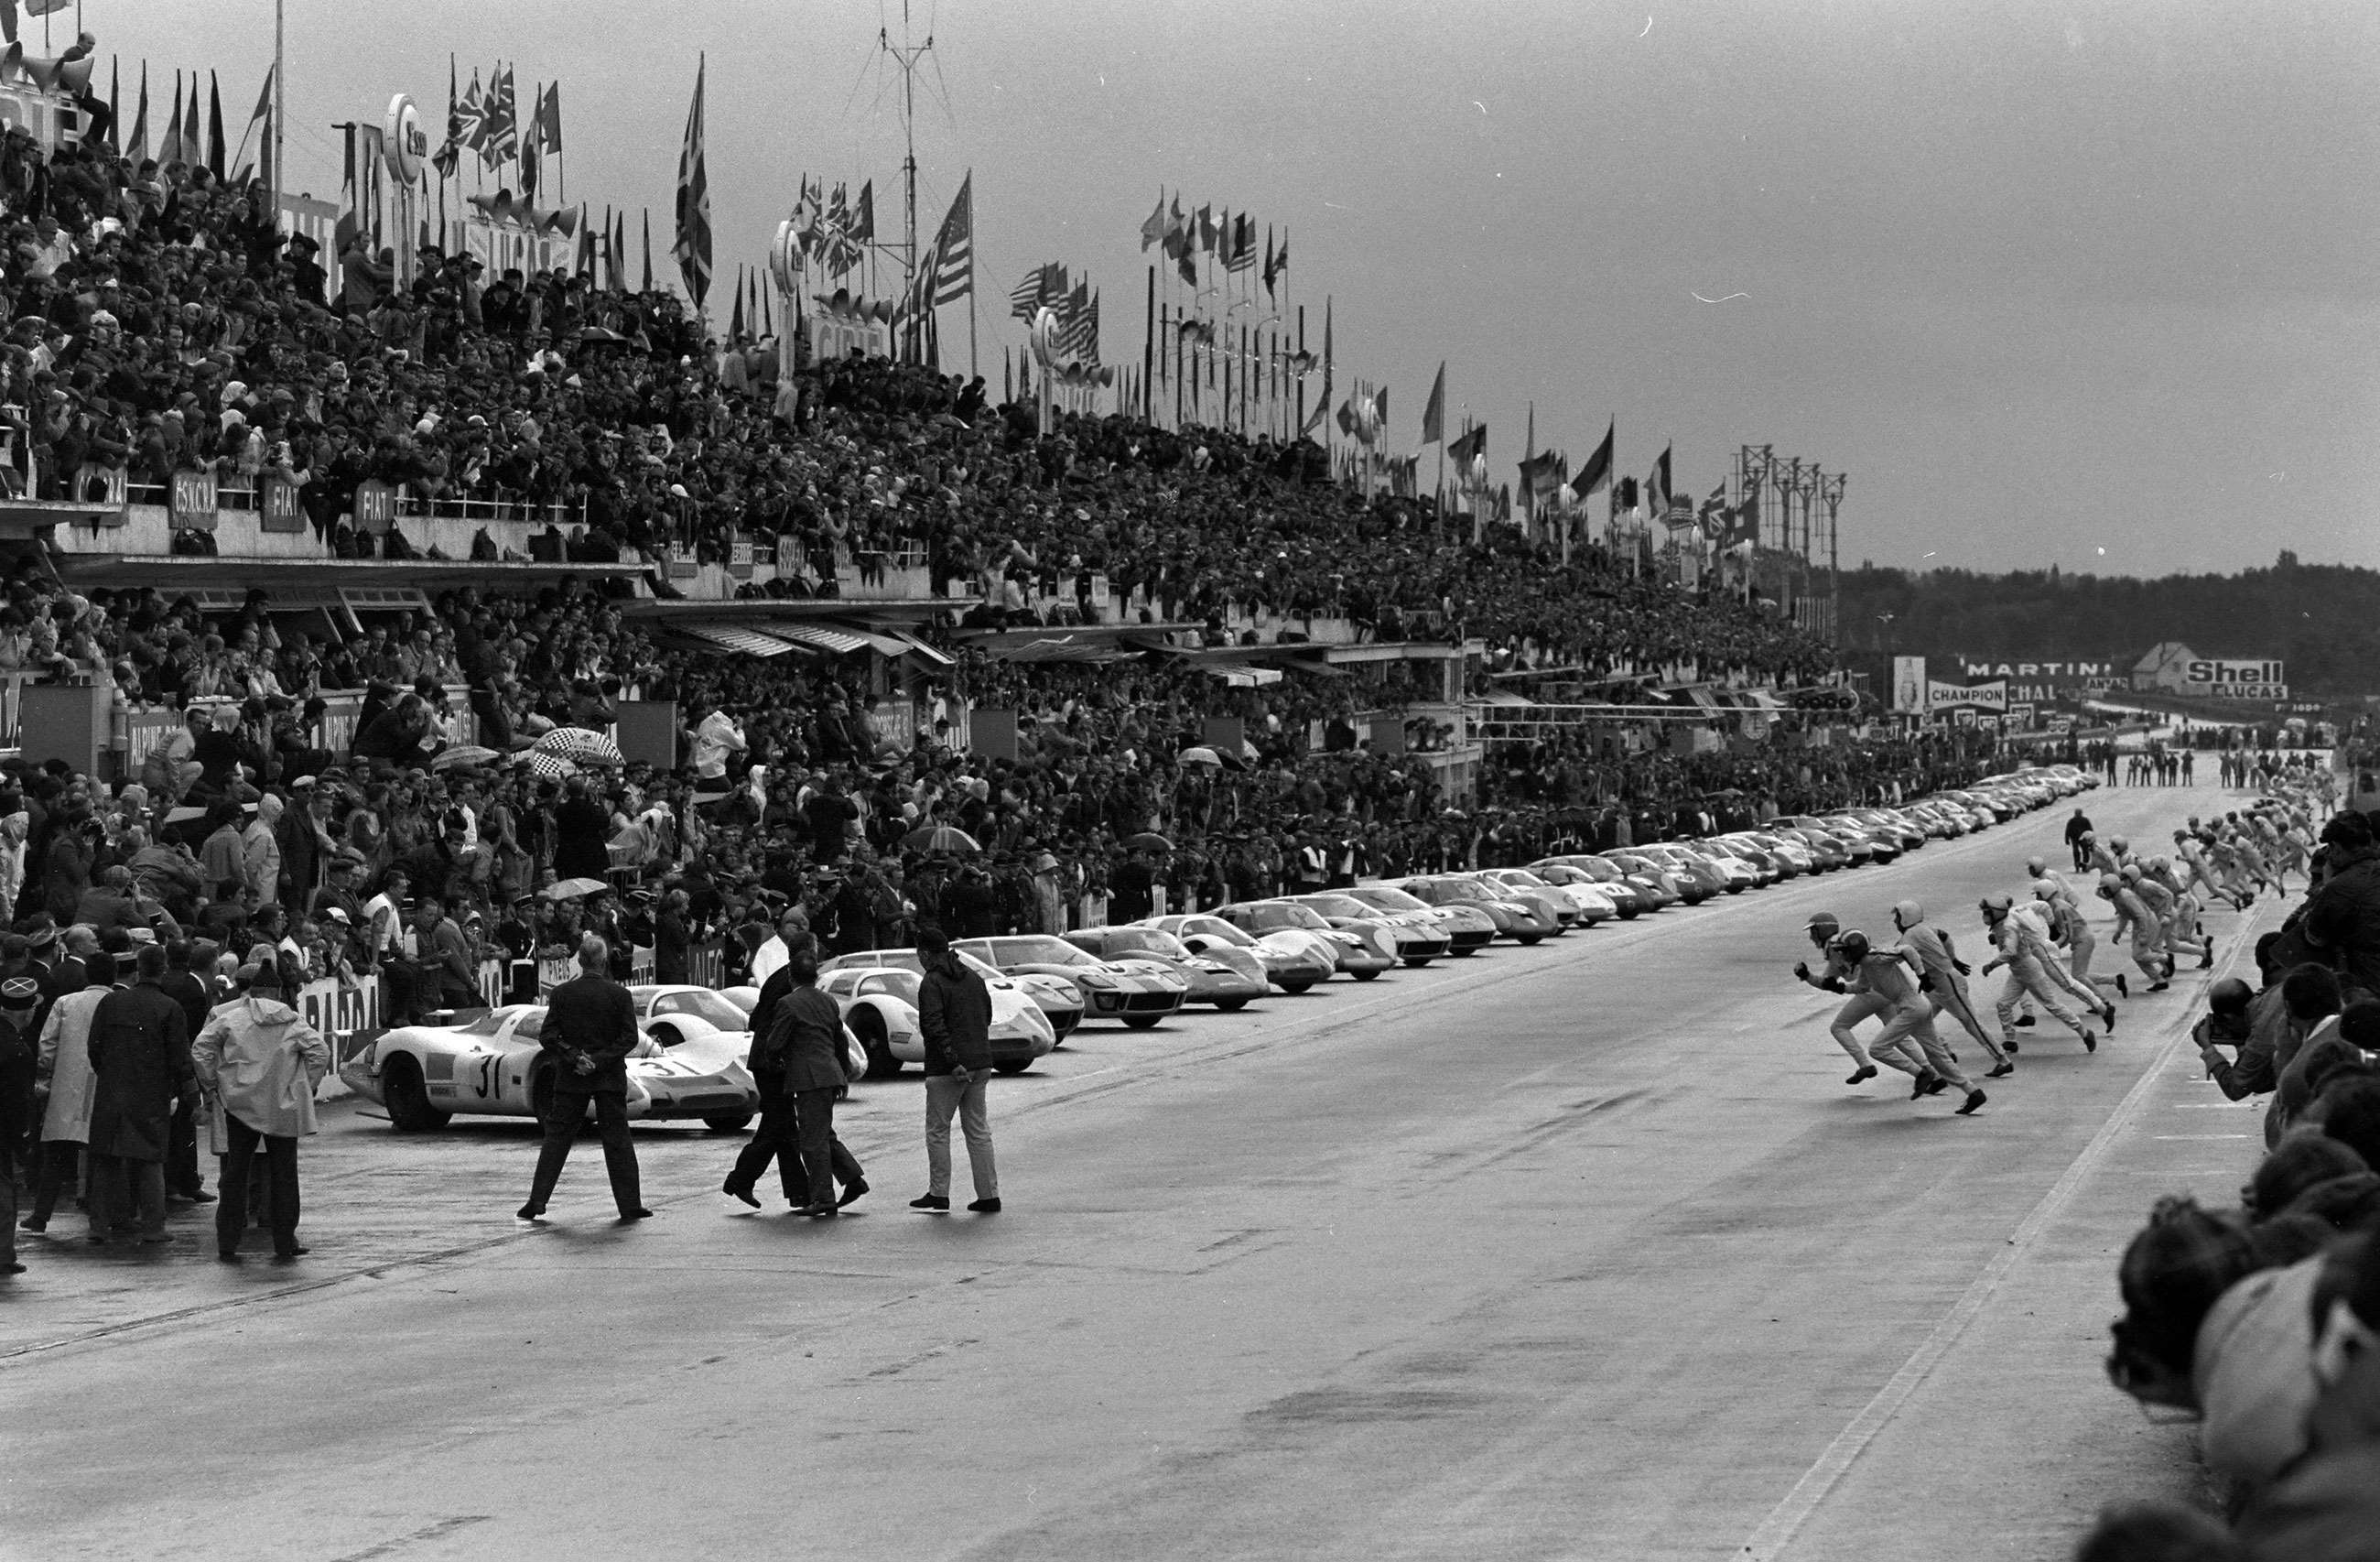 le-mans-1968-running-start-rainer-schelegelmilch-motorsport-images-goodwood-23032020.jpg